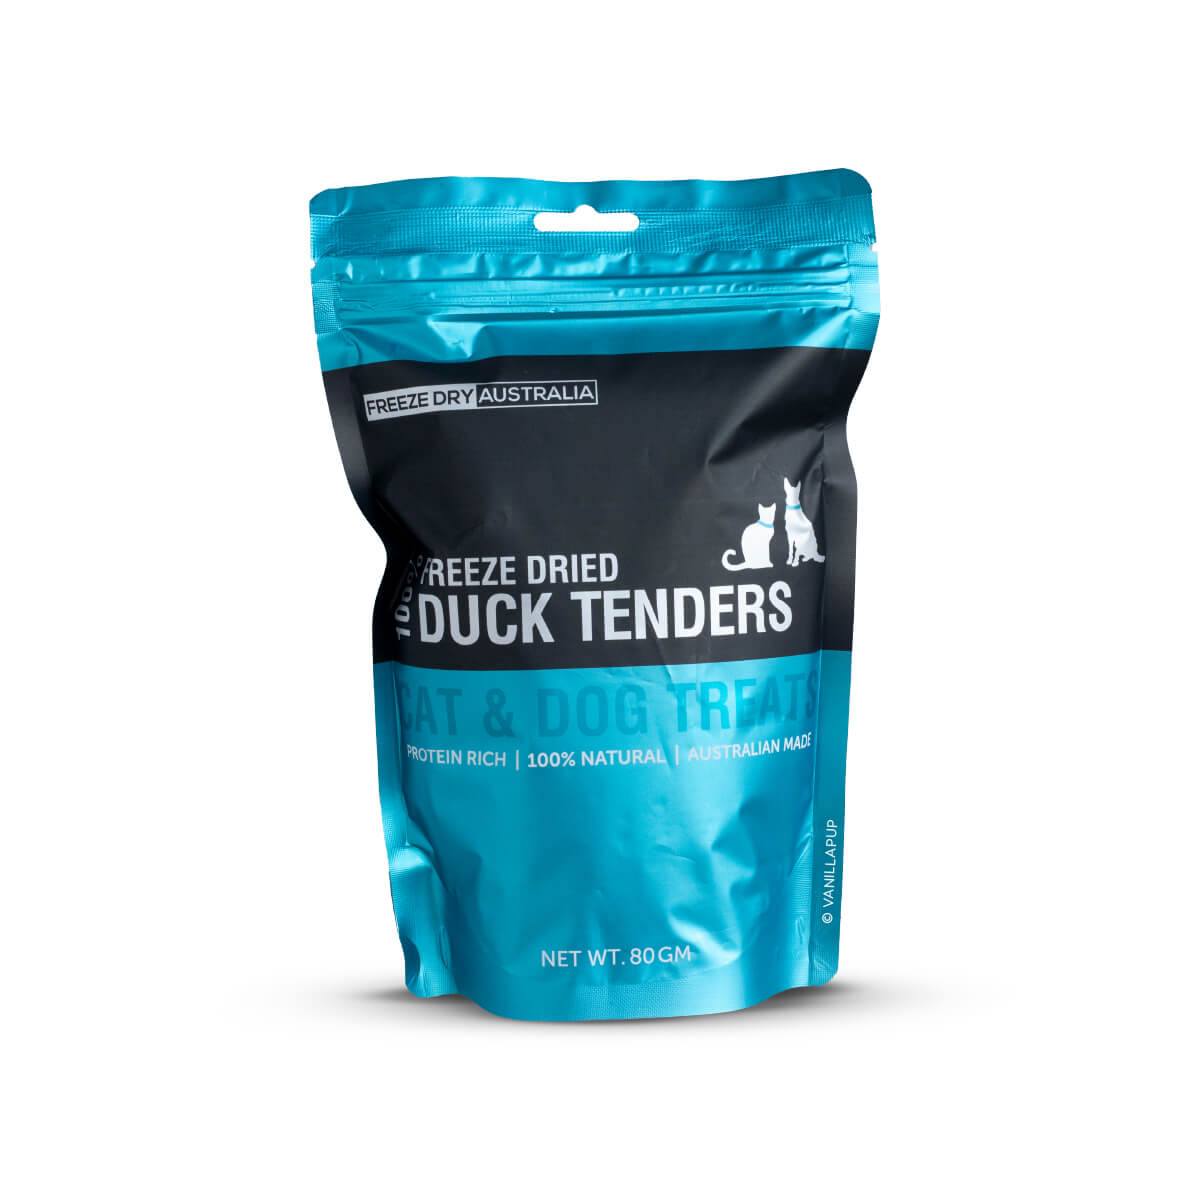 Freeze Dry Australia Duck Tenders 100g